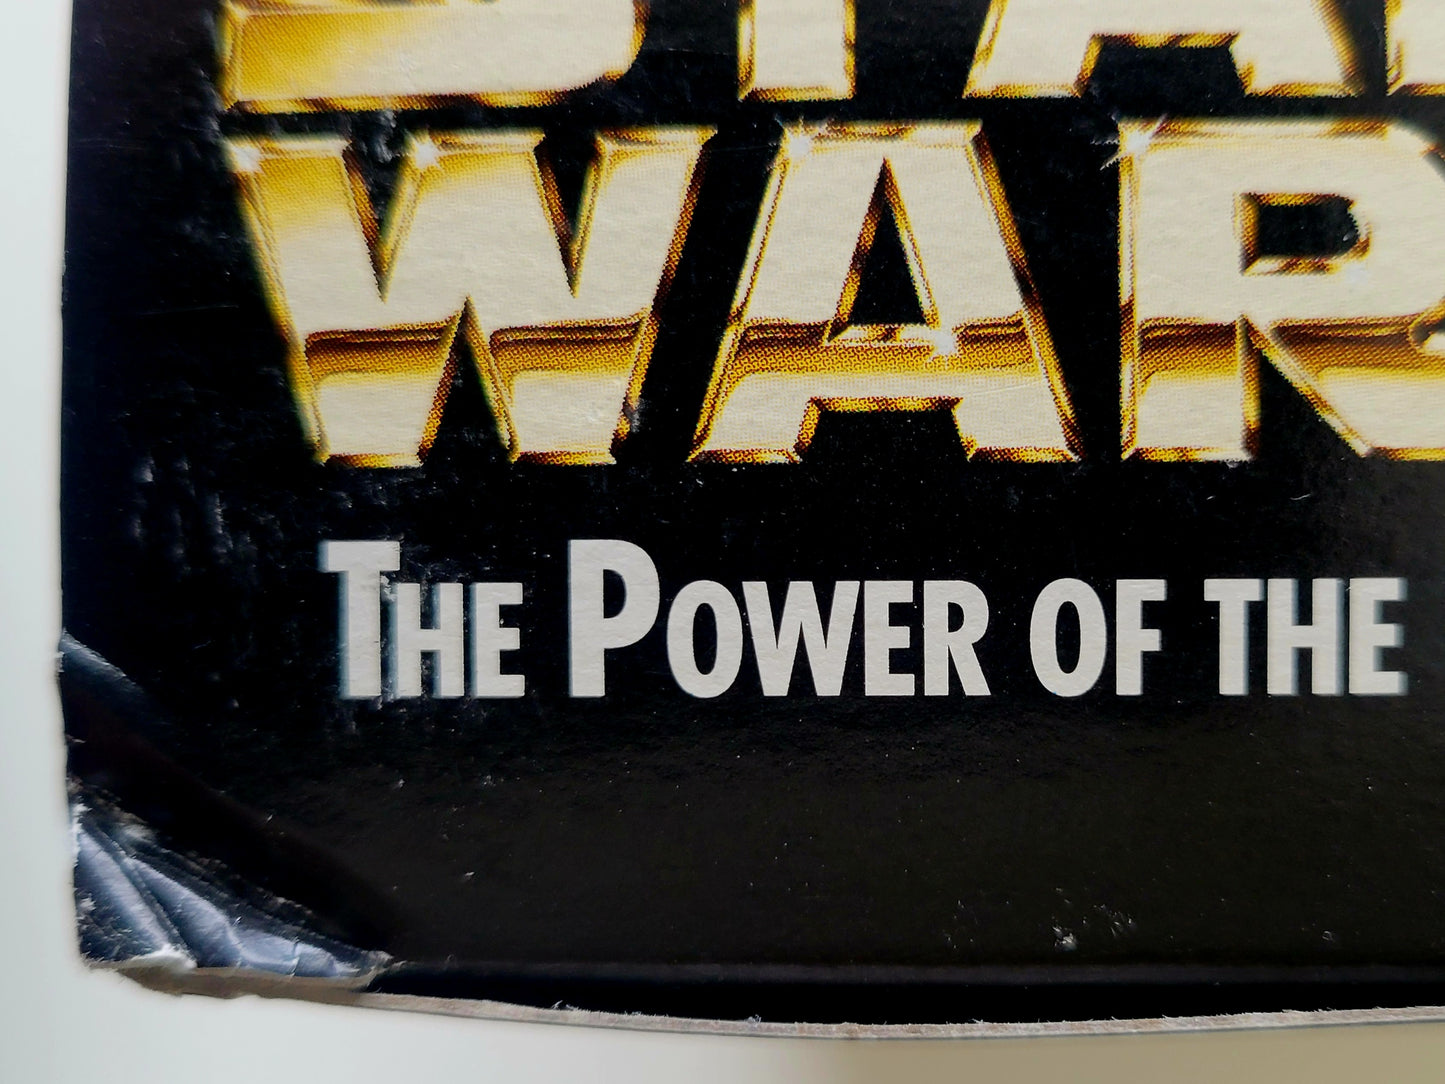 Star Wars: Power of the Force Cantina Showdown (Dr. Evazan, Ponda Baba, Obi-Wan Kenobi)